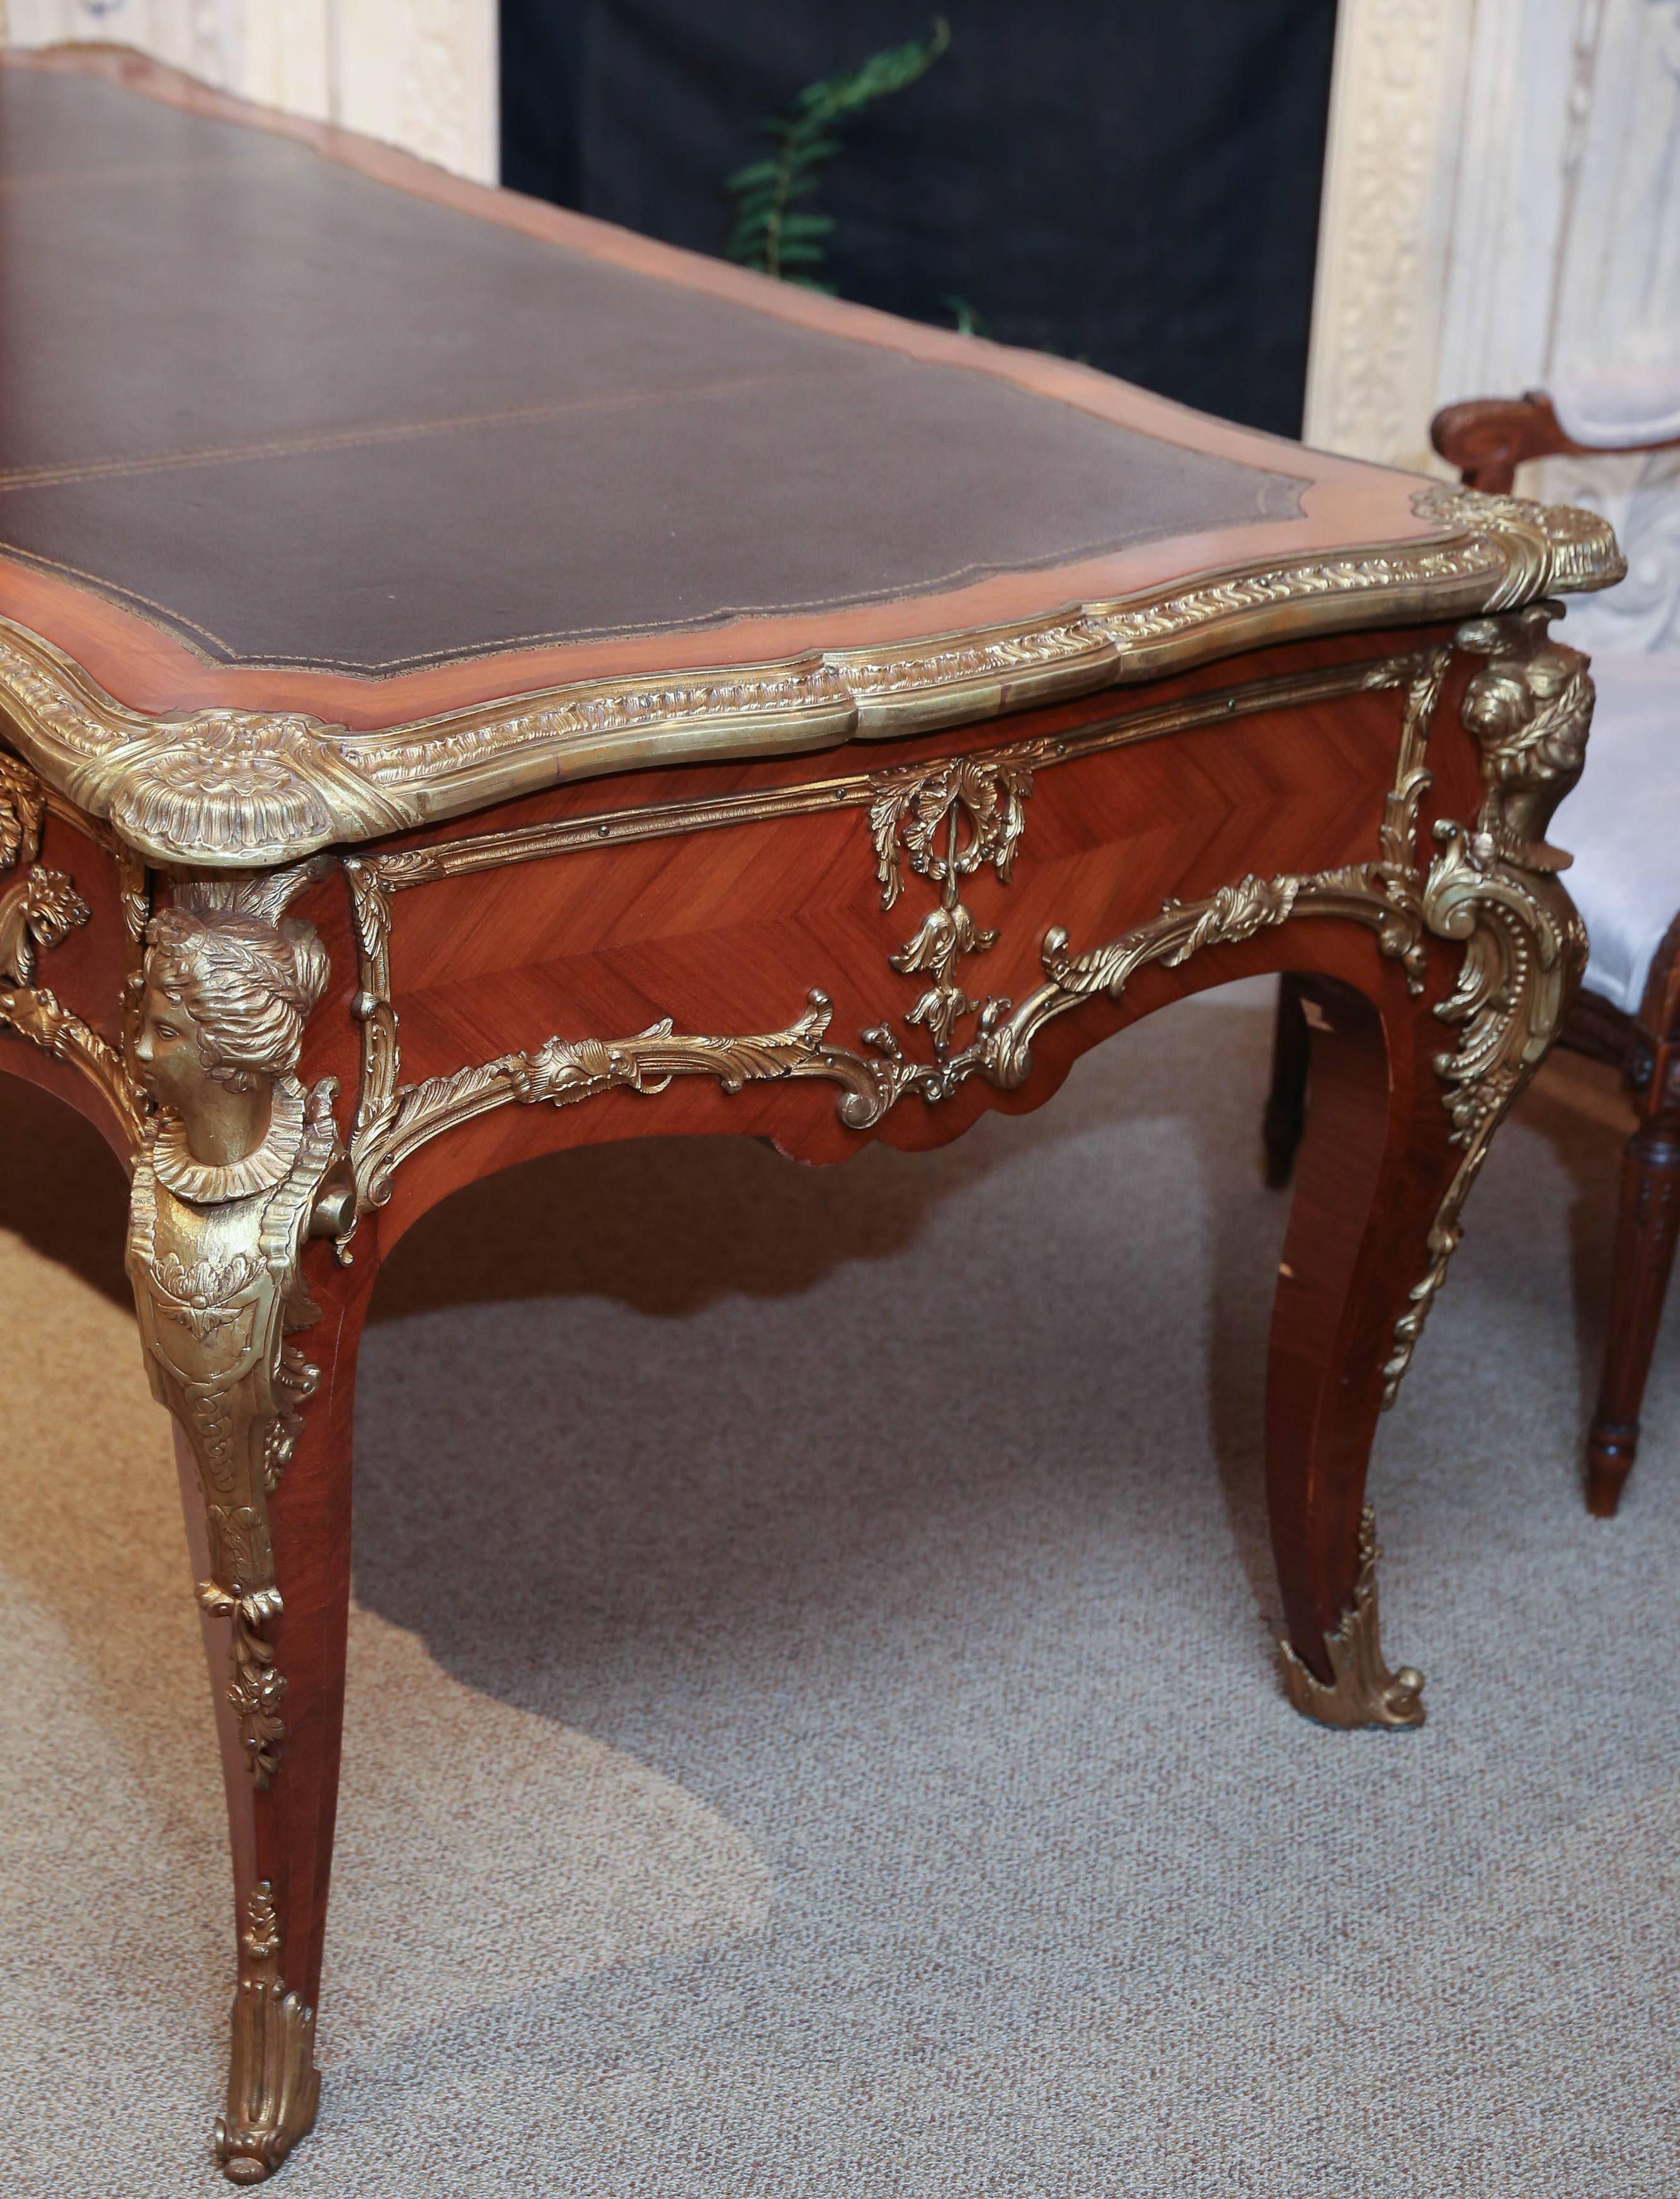 20th Century French Louis XV Style Desk or Bureau Platt